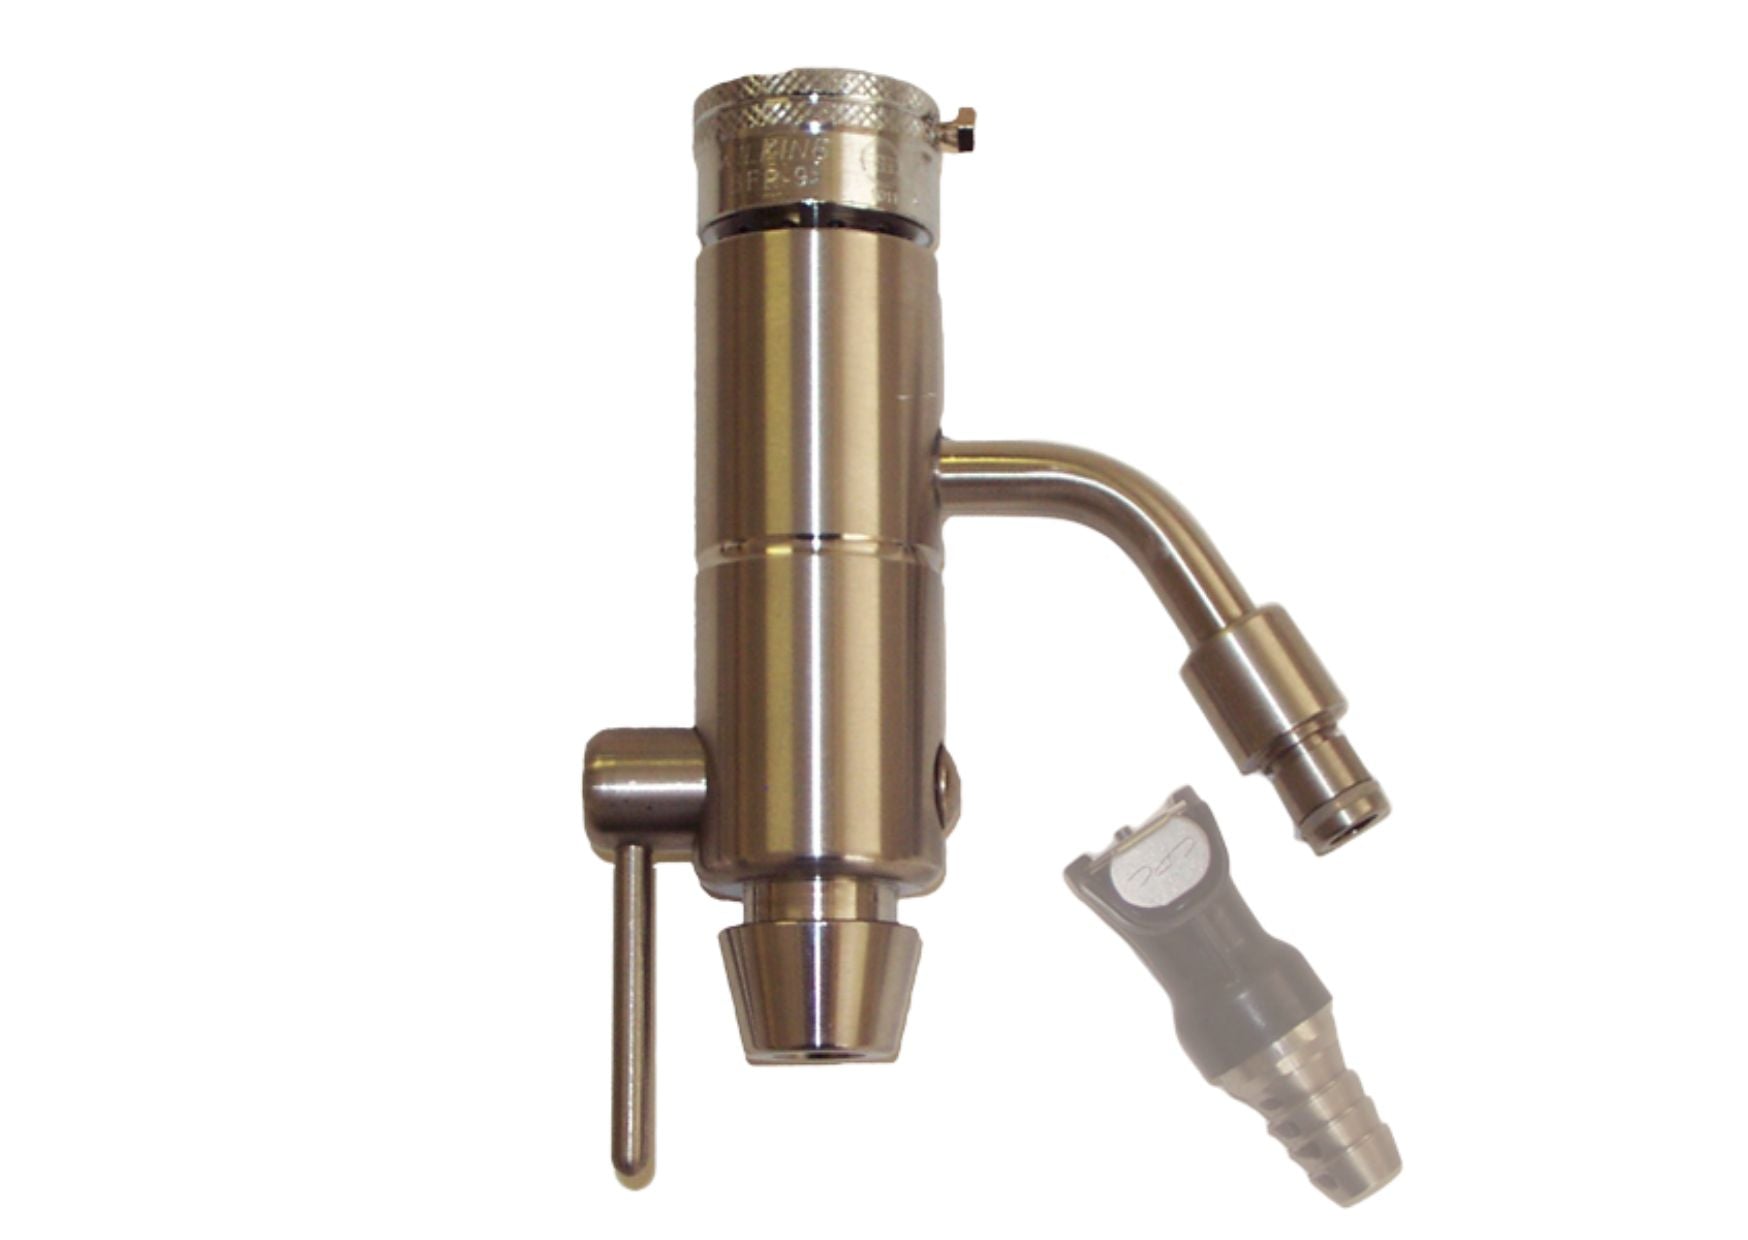 Hydro aspirator, stainless steel, non-return valve, QC